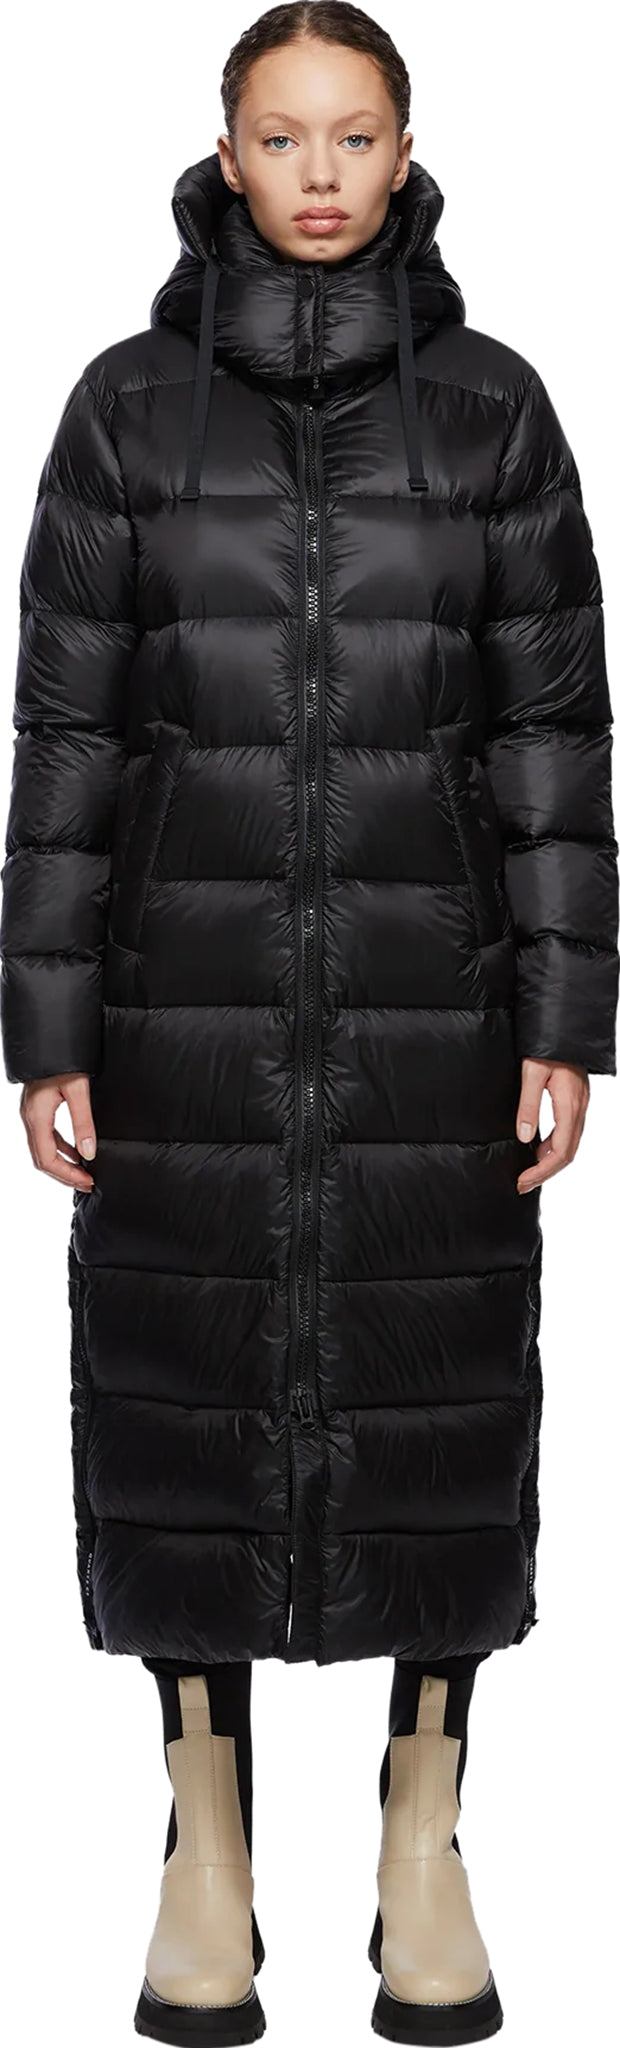 Quartz Co. Lena 2.0 Long Puffer Jacket - Women's | Altitude Sports